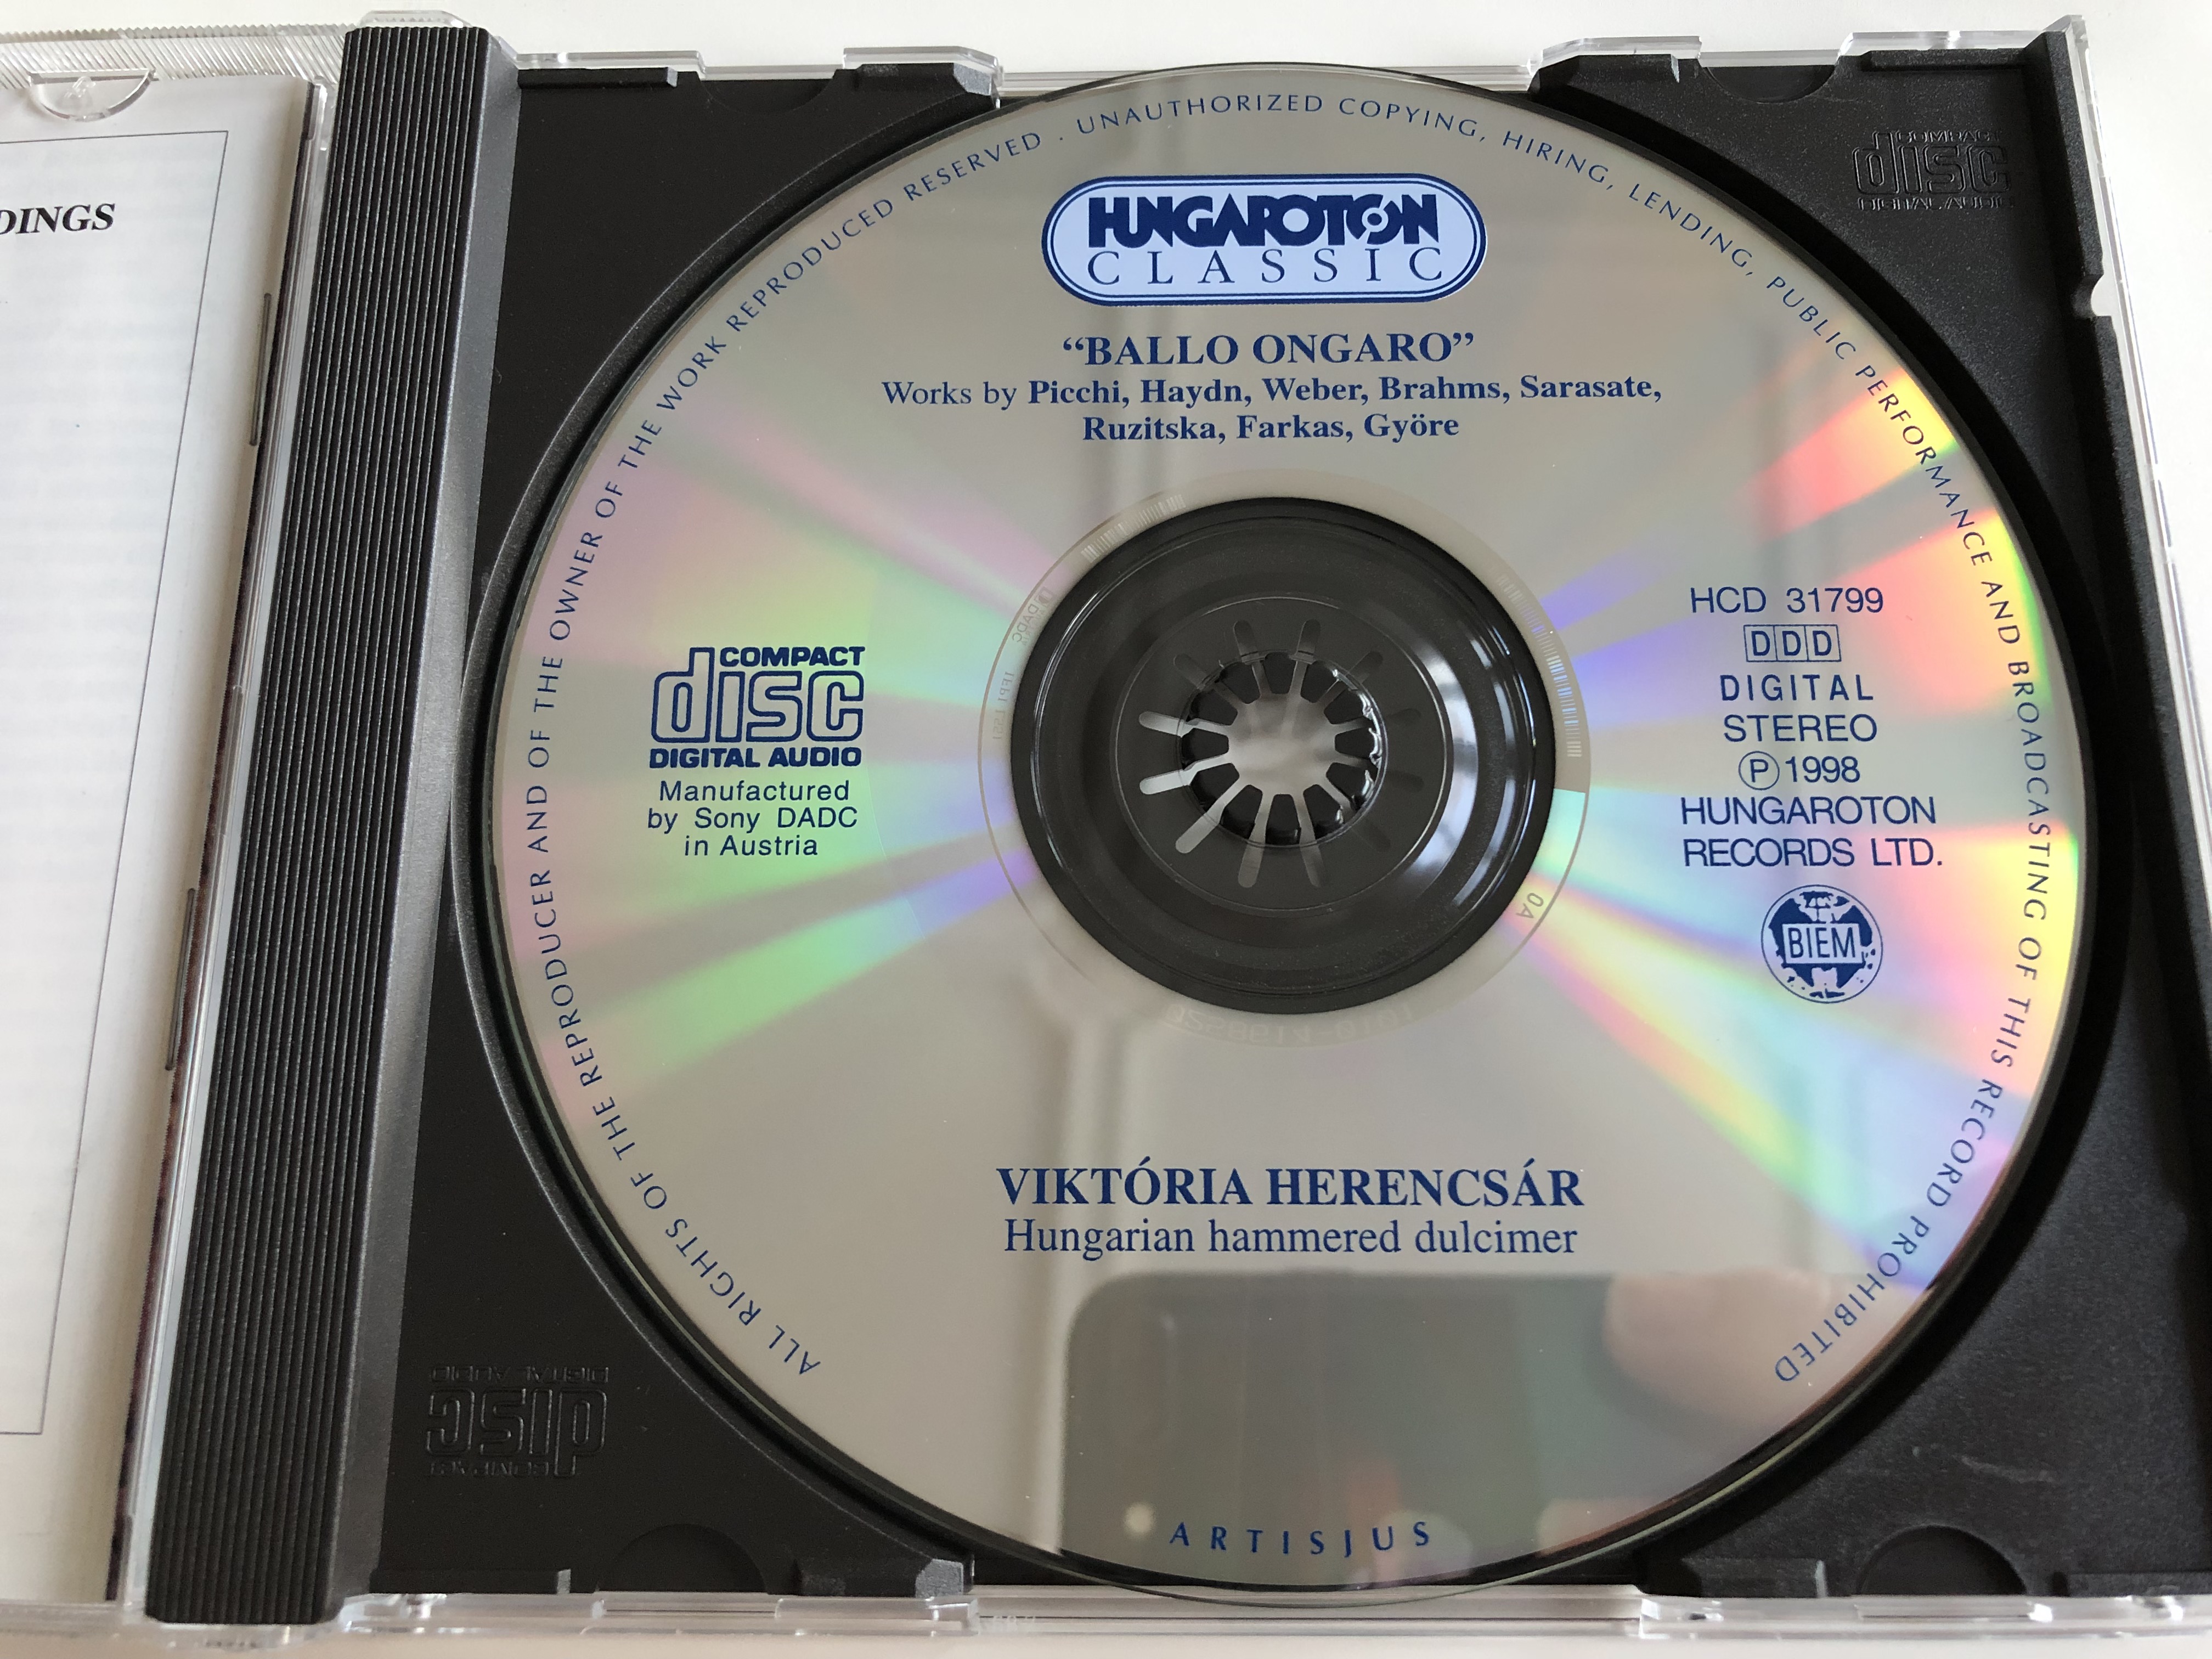 -ballo-ongaro-picchi-haydn-weber-brahms-sarasate-ruzitska-farkas-gyore-viktoria-herencsar-hungarian-hammered-dulcimer-hungaroton-classic-audio-cd-1998-stereo-hcd-31799-5-.jpg